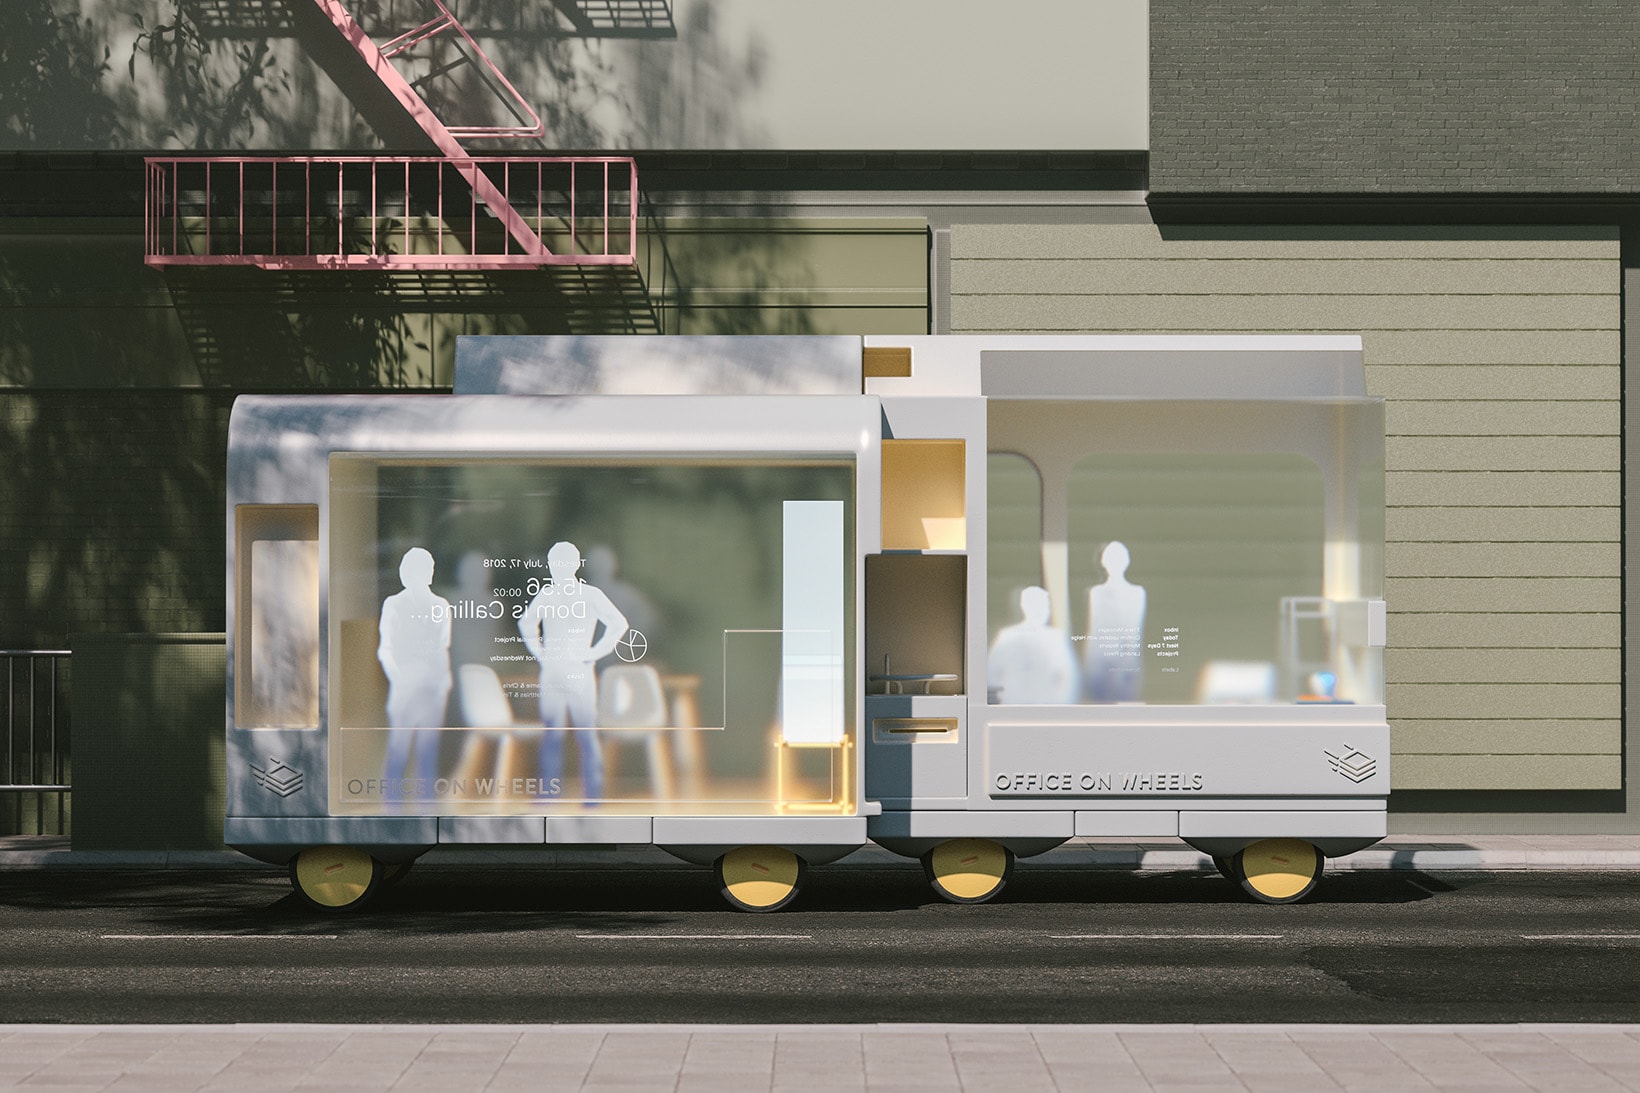 Ikea SPACE10 Interior Design Innovation Future Lab Car Self Driving Autonomous Vehicle Concept Project